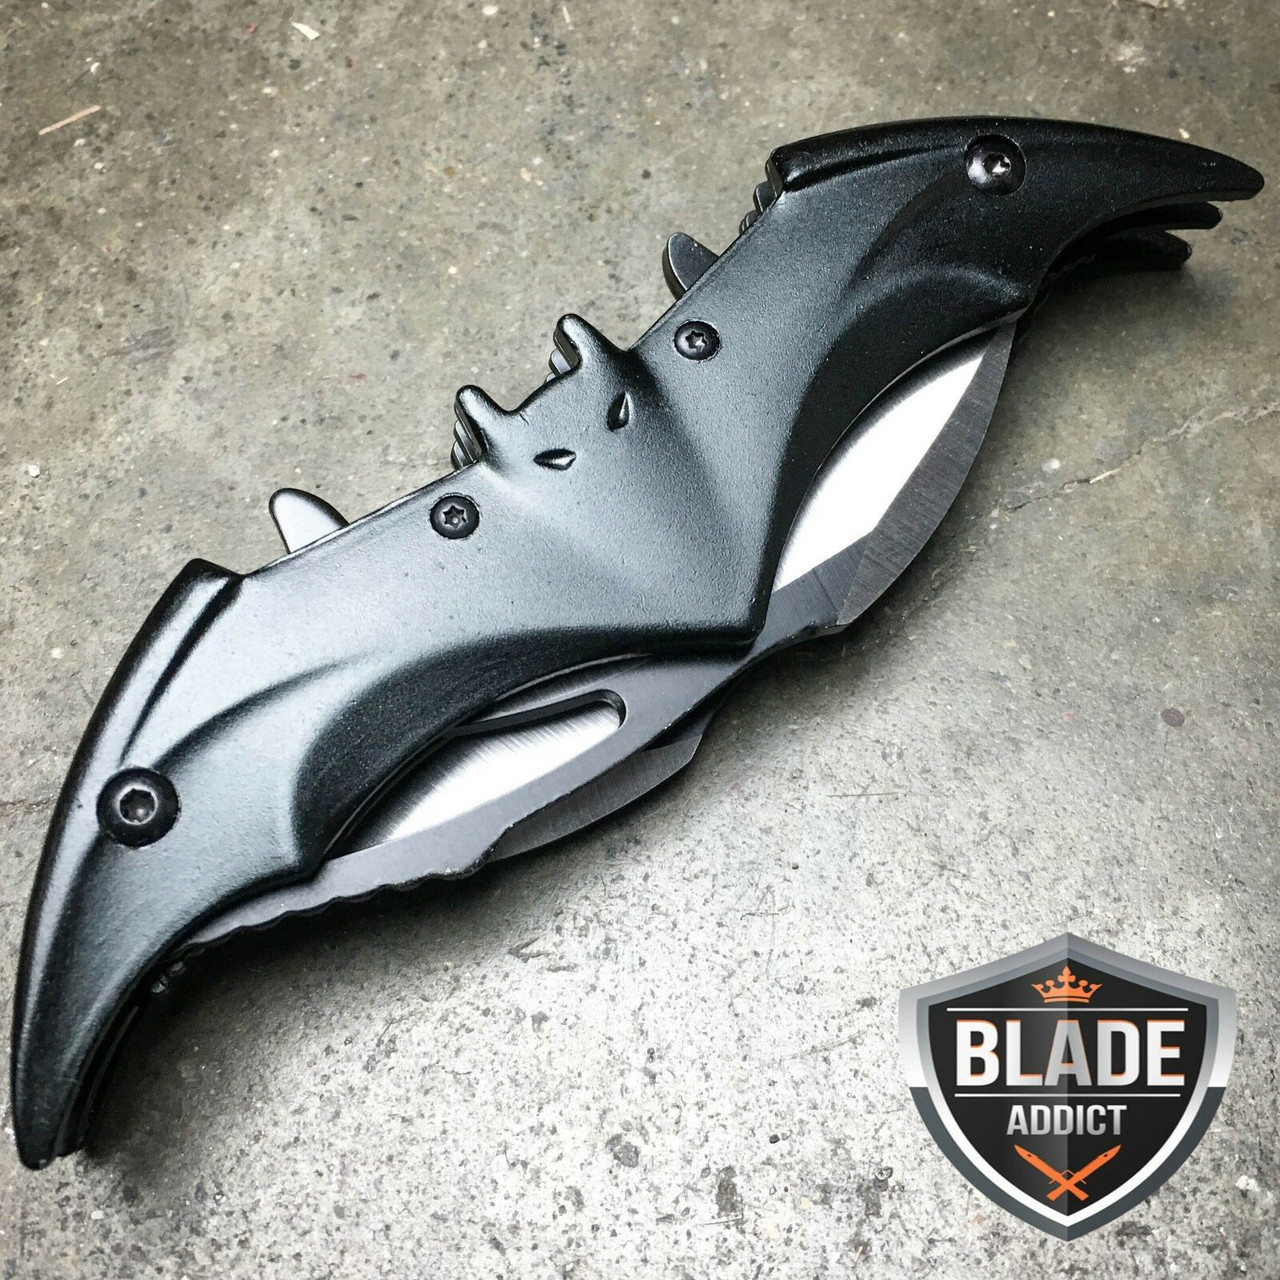 7.5 Dual Blade Knife Pocket Knife Batman Inspired Tactical